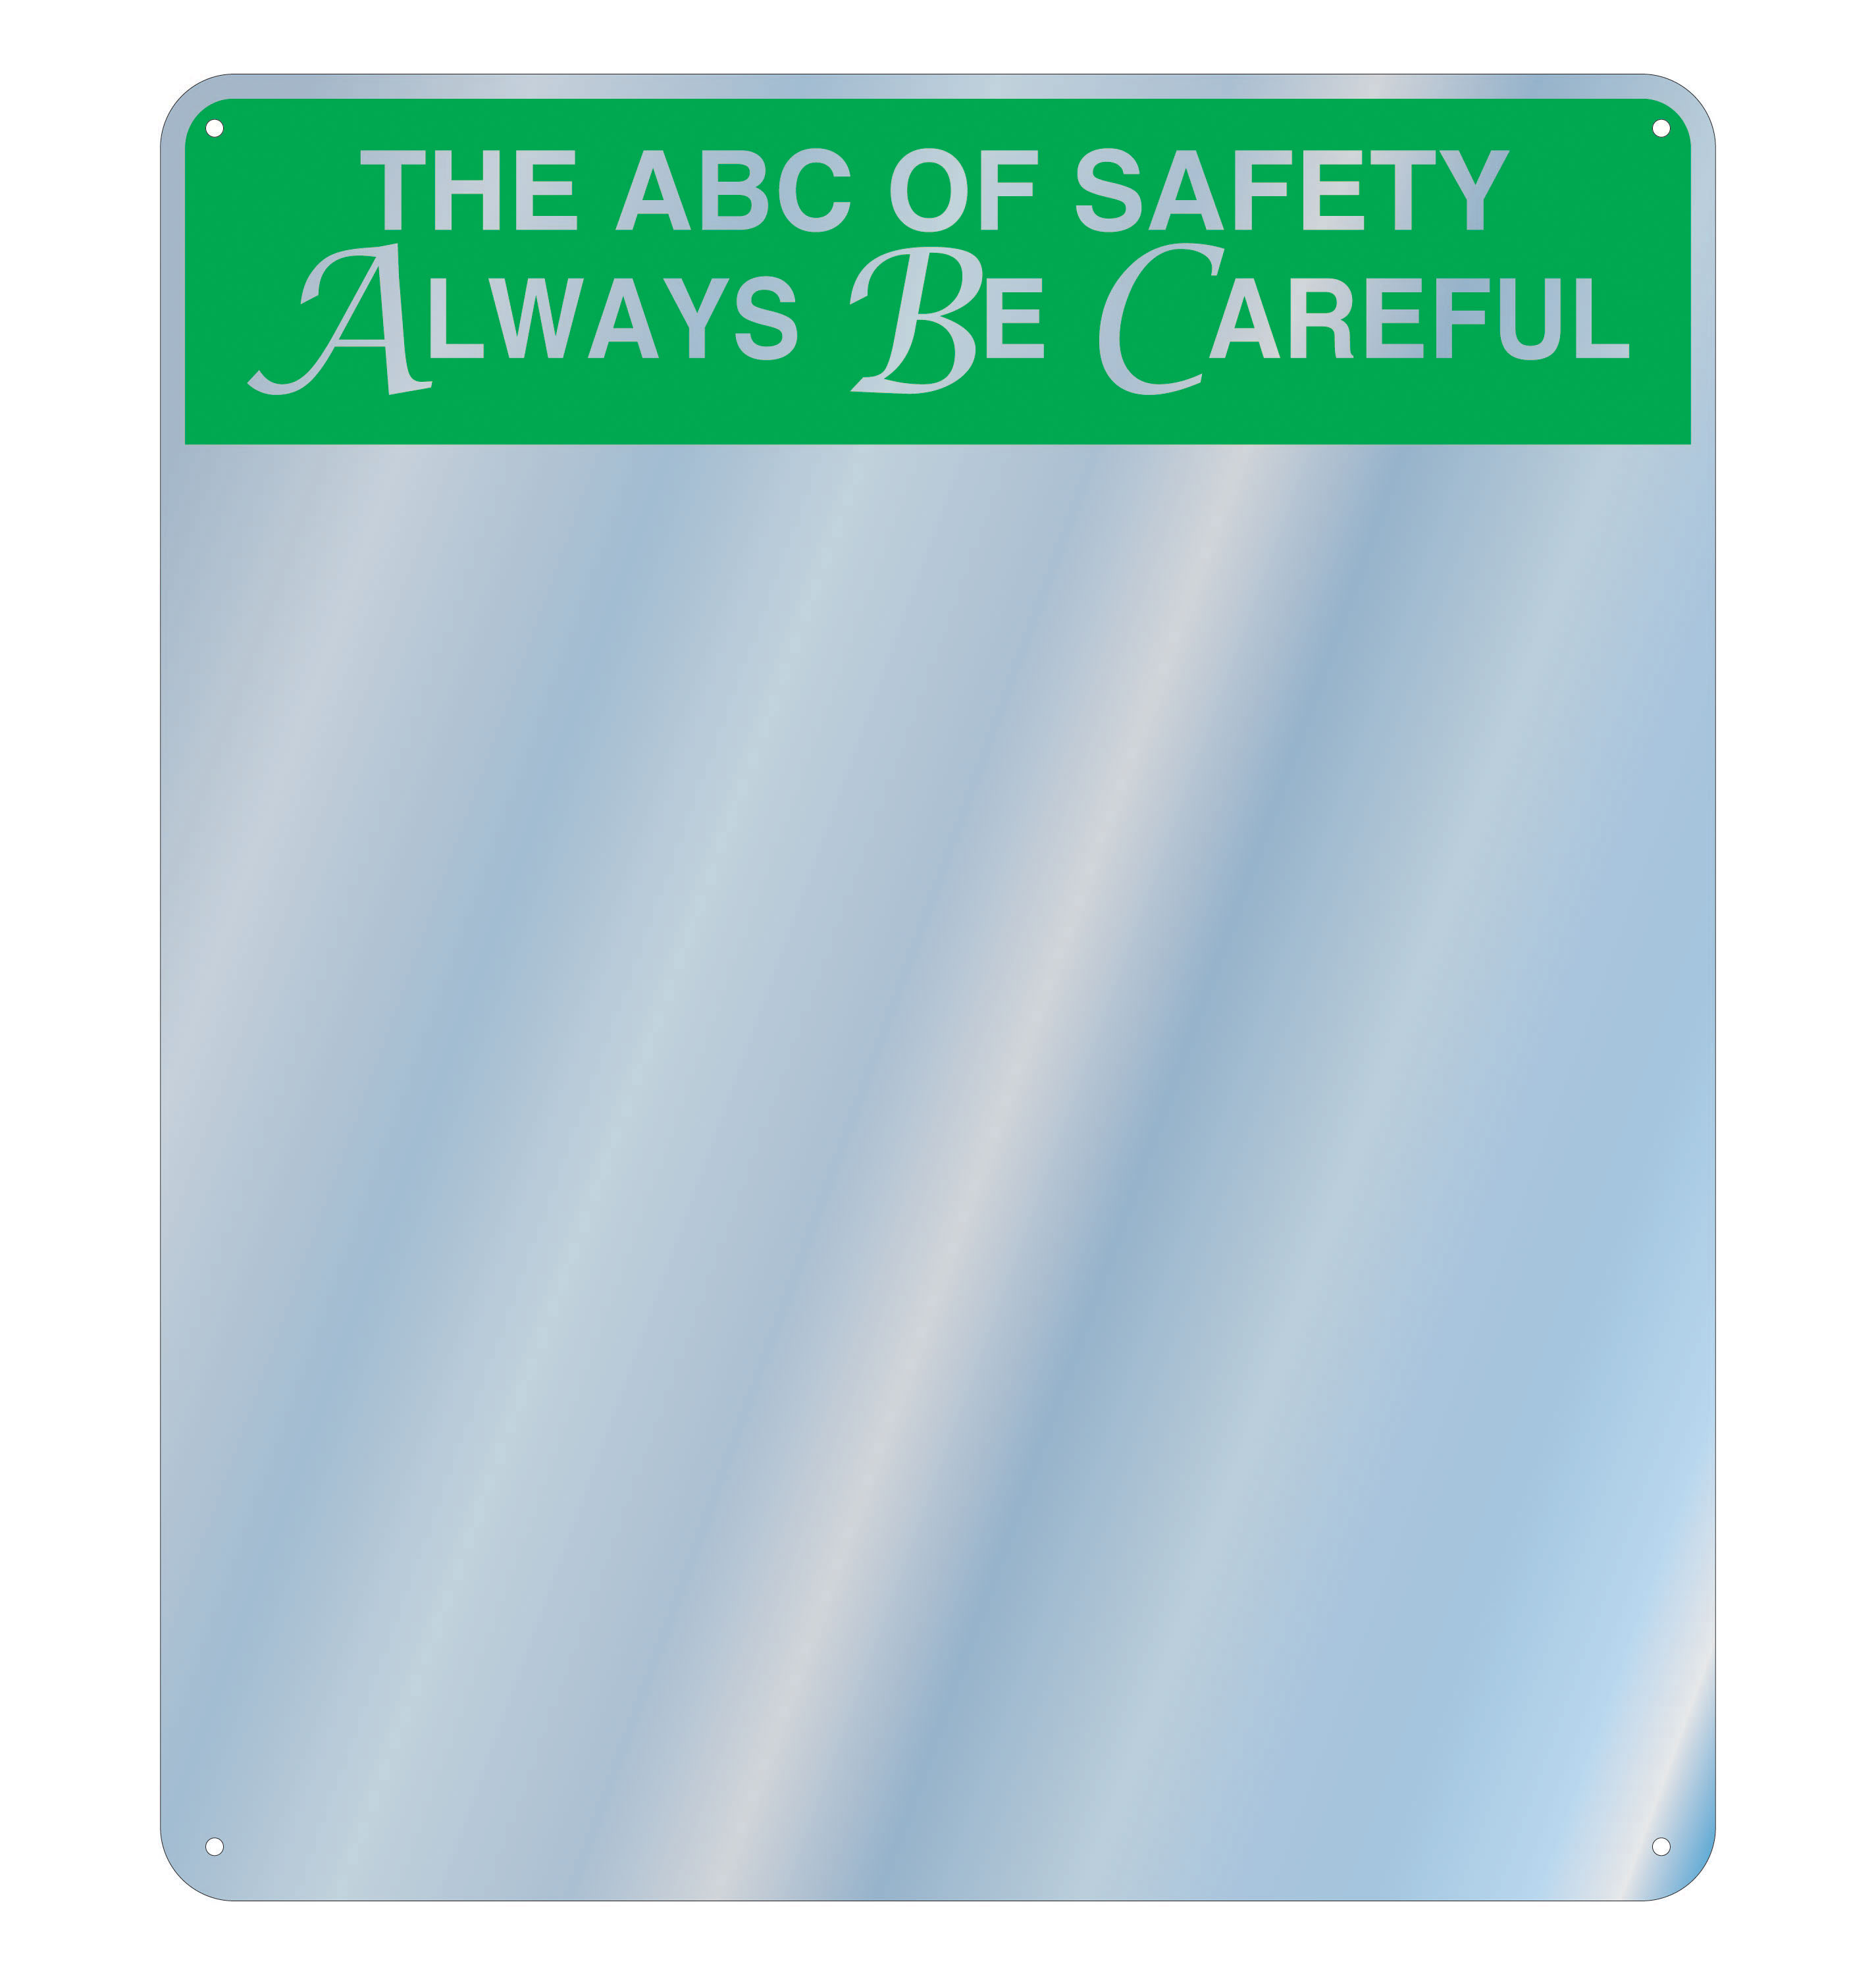 MIRROR BI-LINGUAL ACRYLI 19X16 "ABC OF SAFETY"